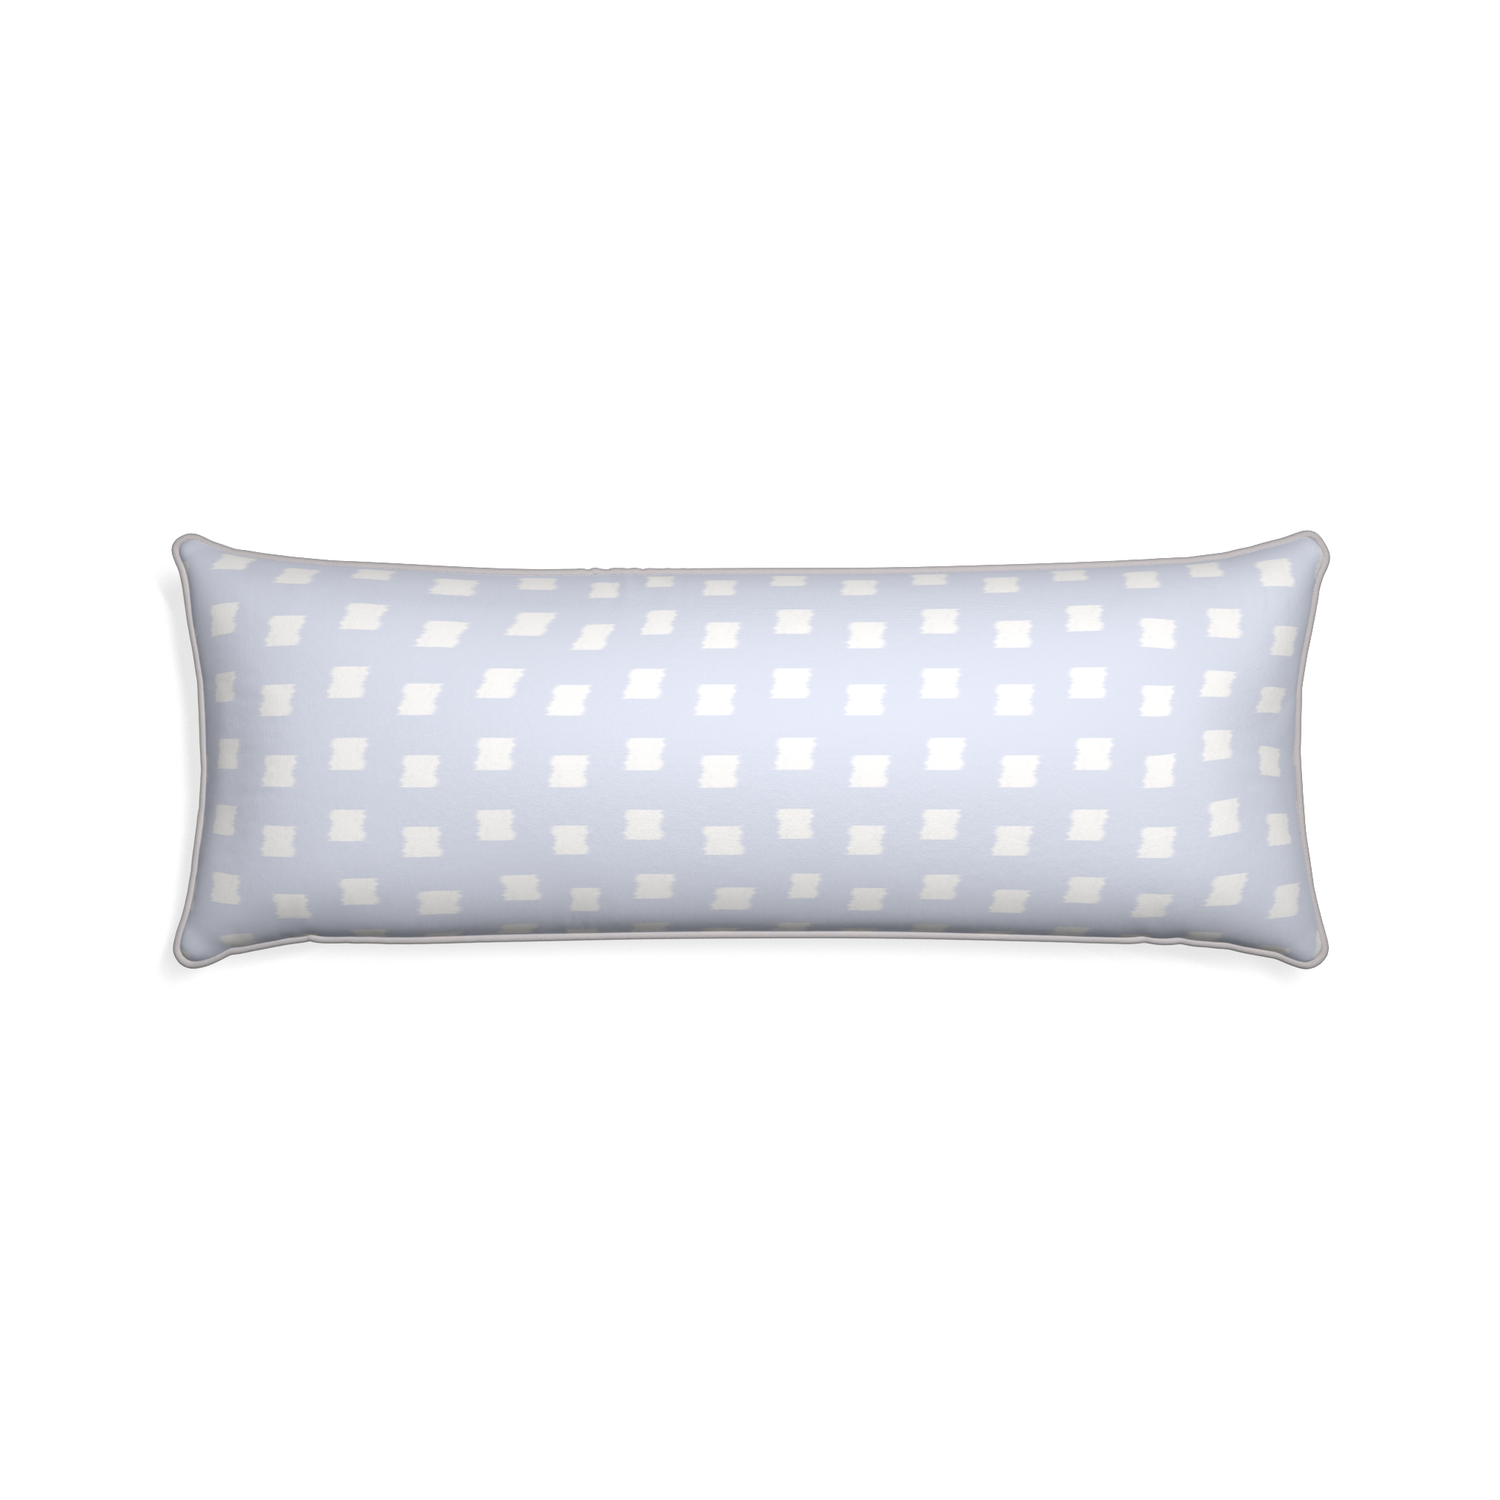 Xl-lumbar denton custom pillow with pebble piping on white background